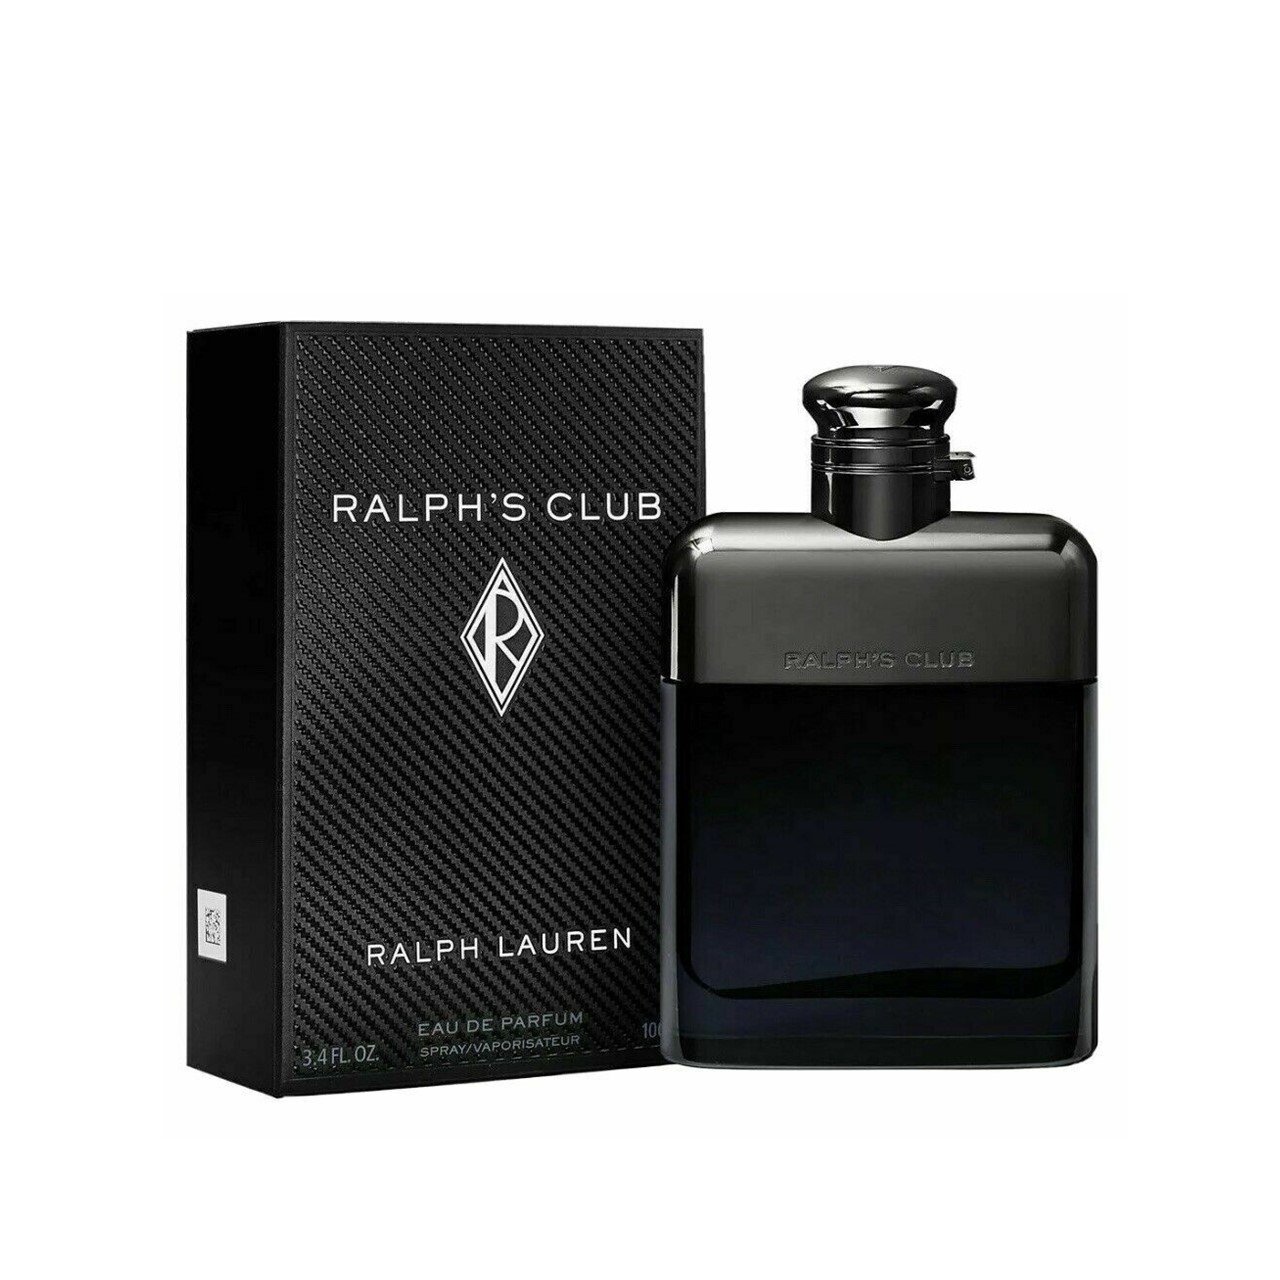 Ralph Lauren Ralph's Club Eau de Parfum For Men 100ml